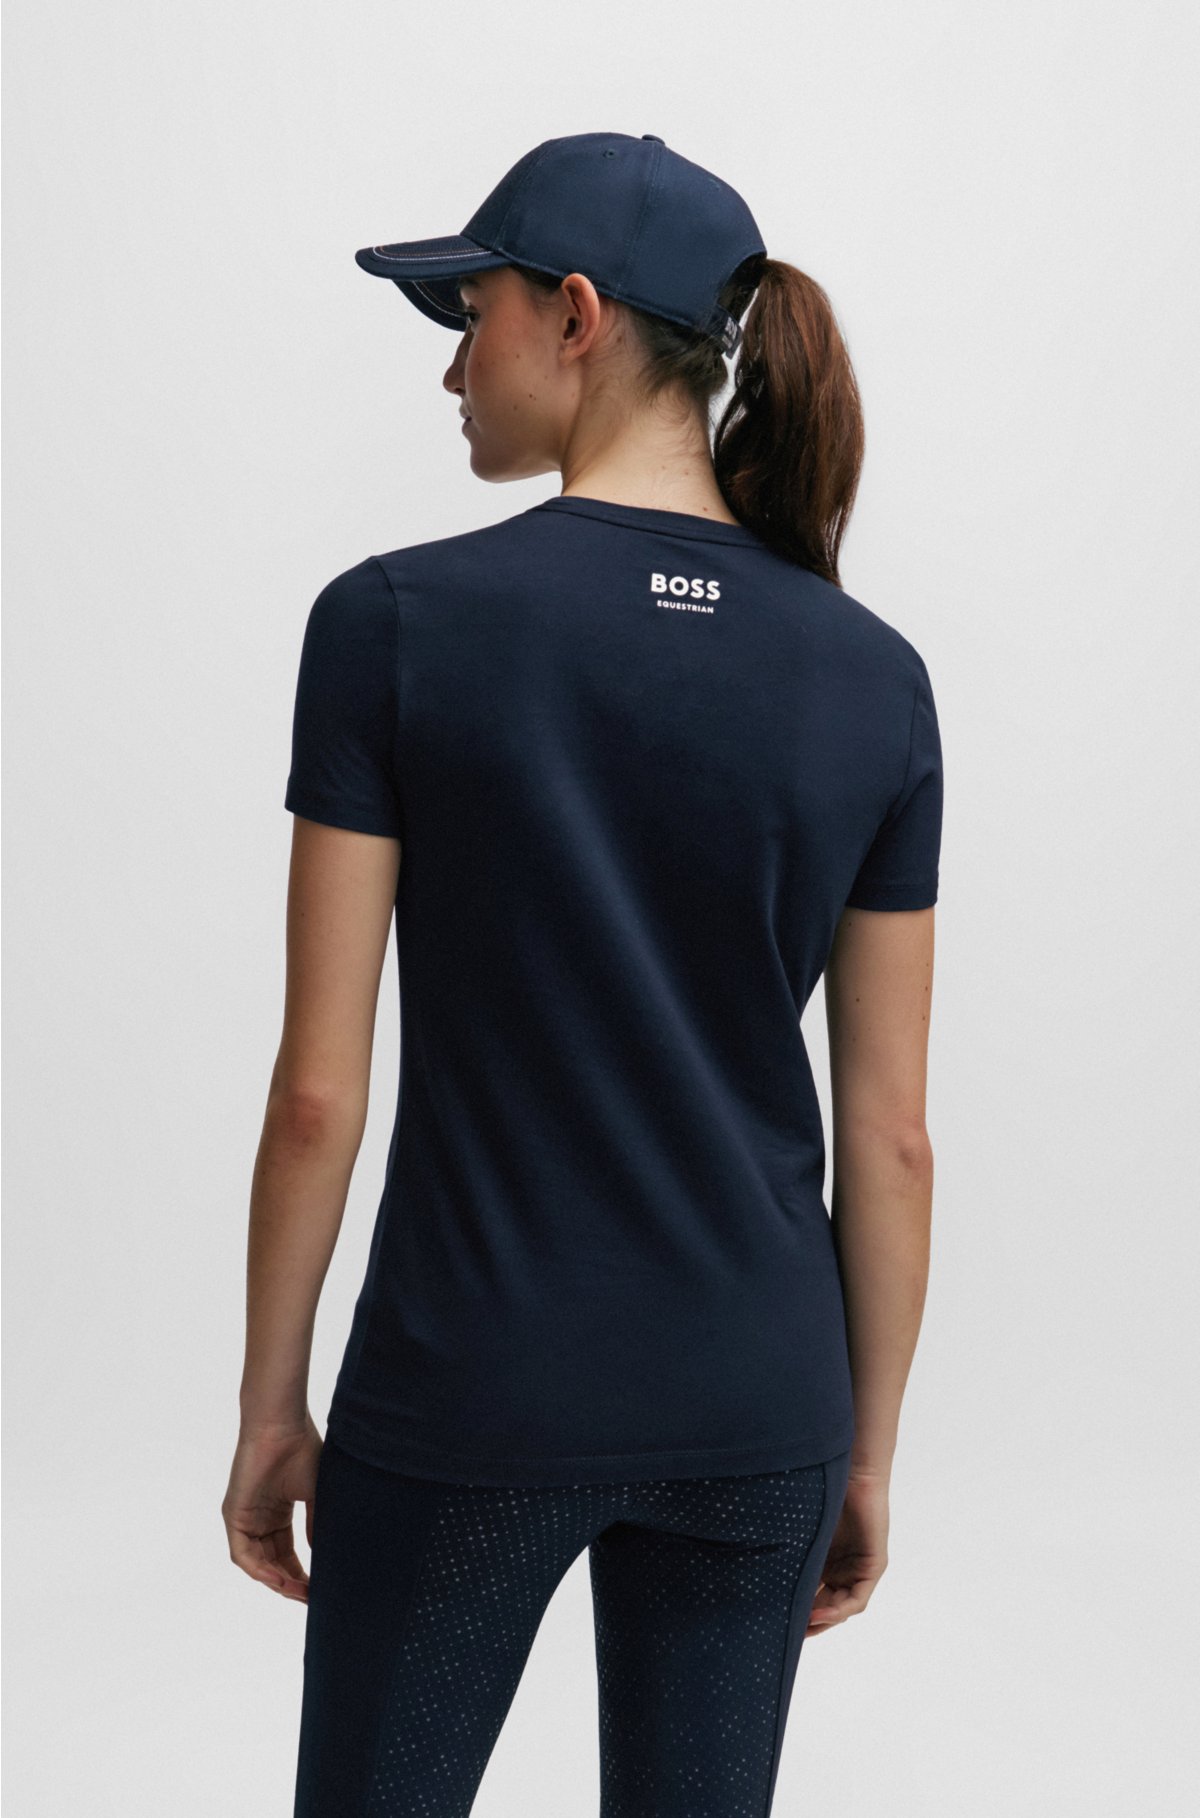 Equestrian stretch-cotton T-shirt with logo details, Dark Blue